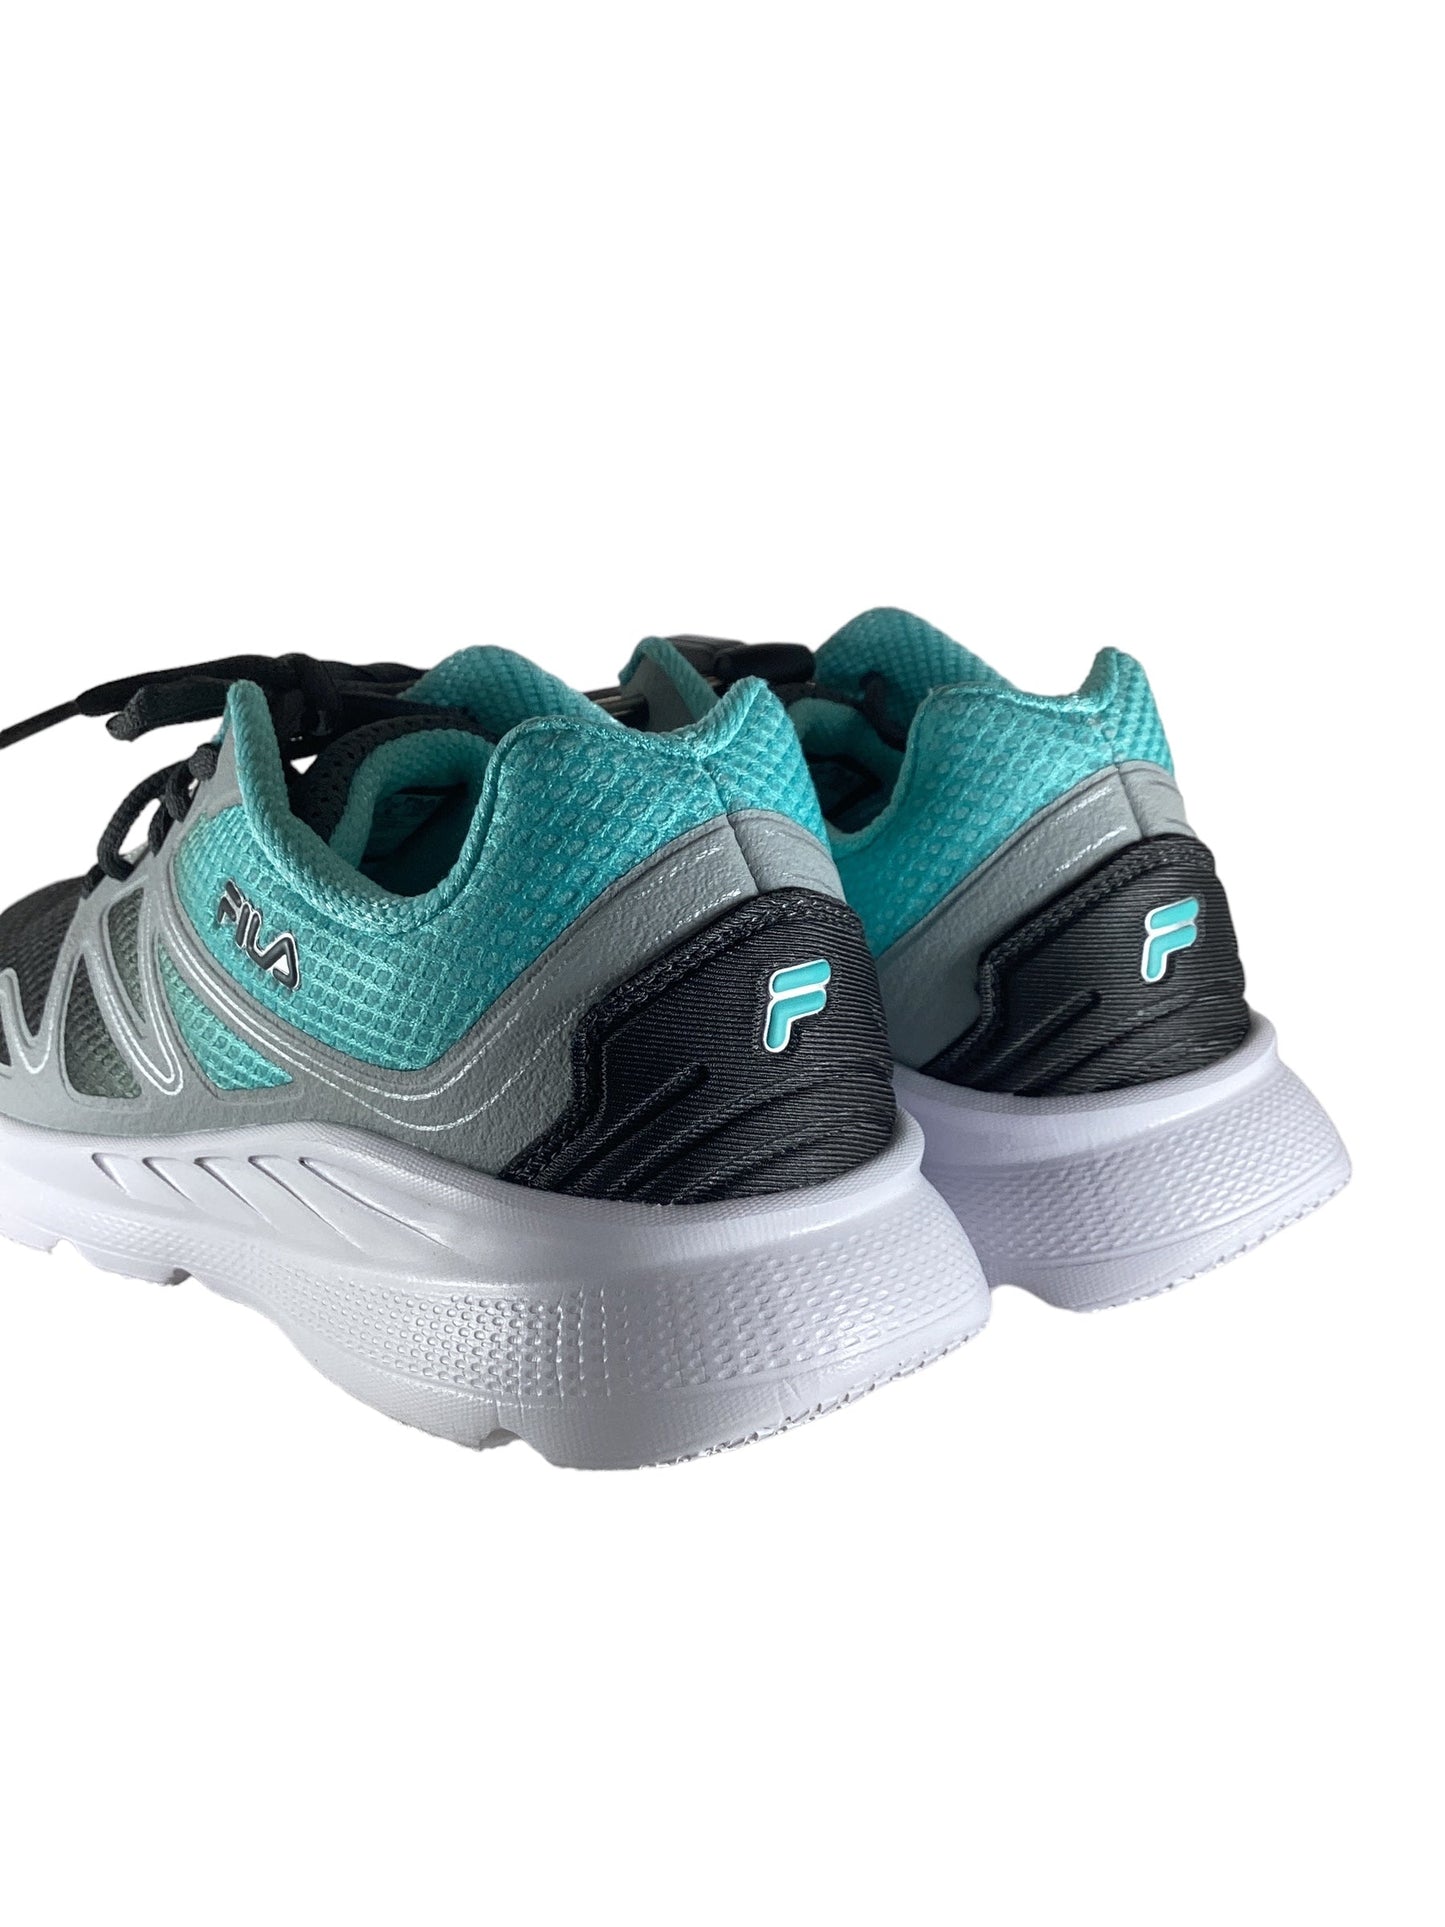 Blue Shoes Athletic Fila, Size 8.5